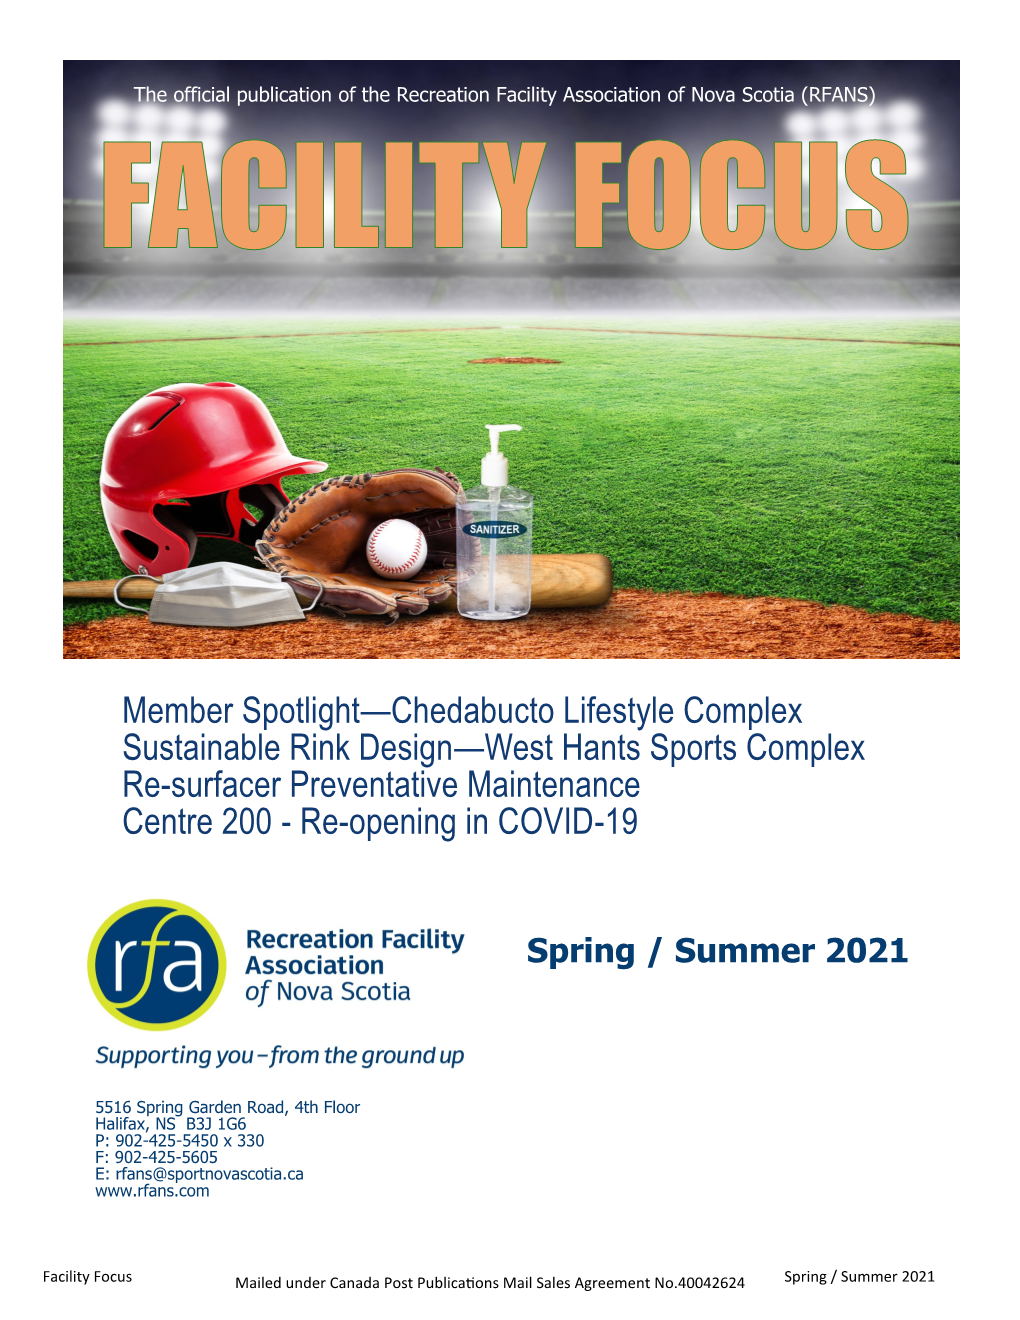 2021 Spring/Summer Facility Focus